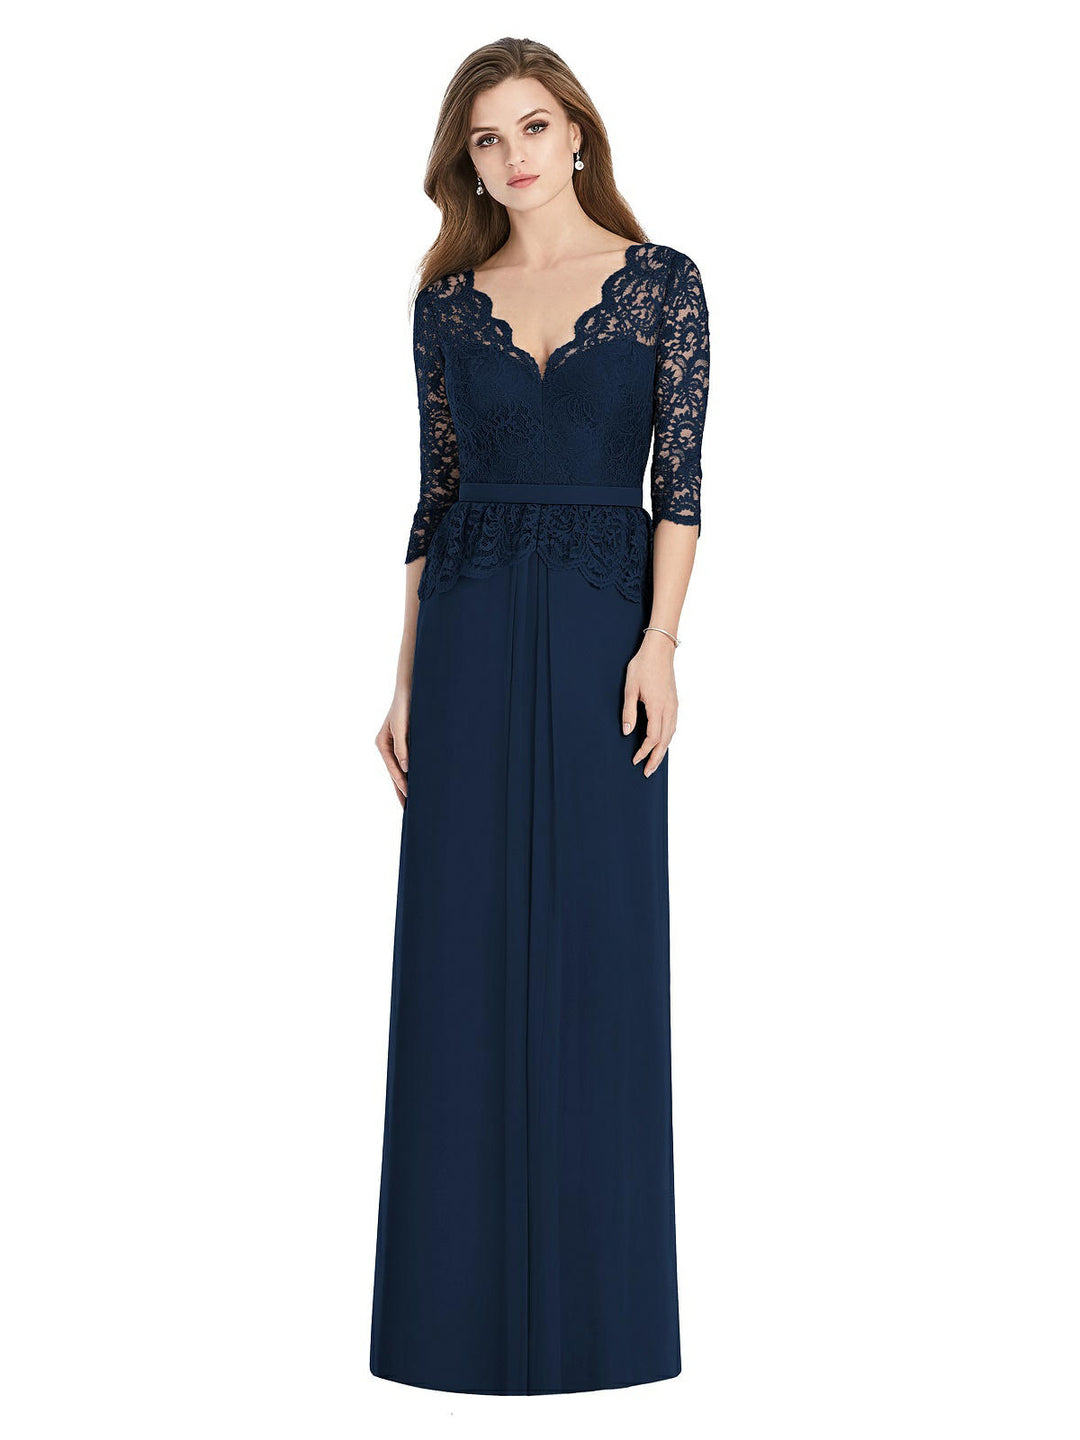 Long Sleeve Illusion Back Dress by Jenny Packham for Dessy Style JP1011 Size 12